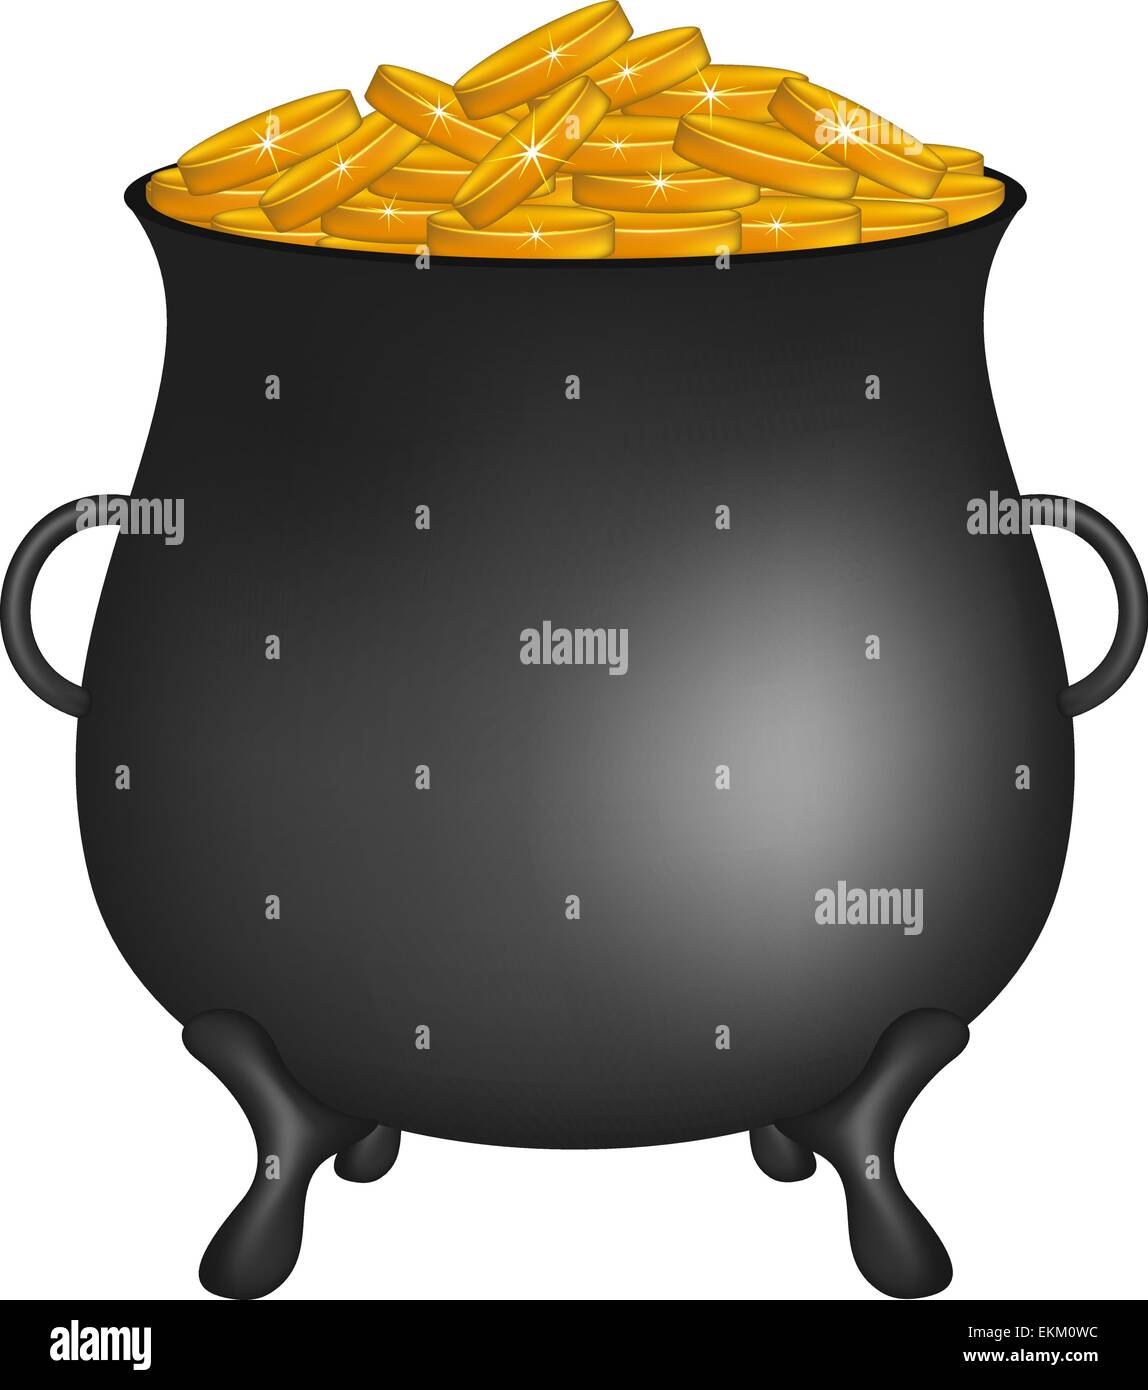 Black pot with golden money coins Stock Vector